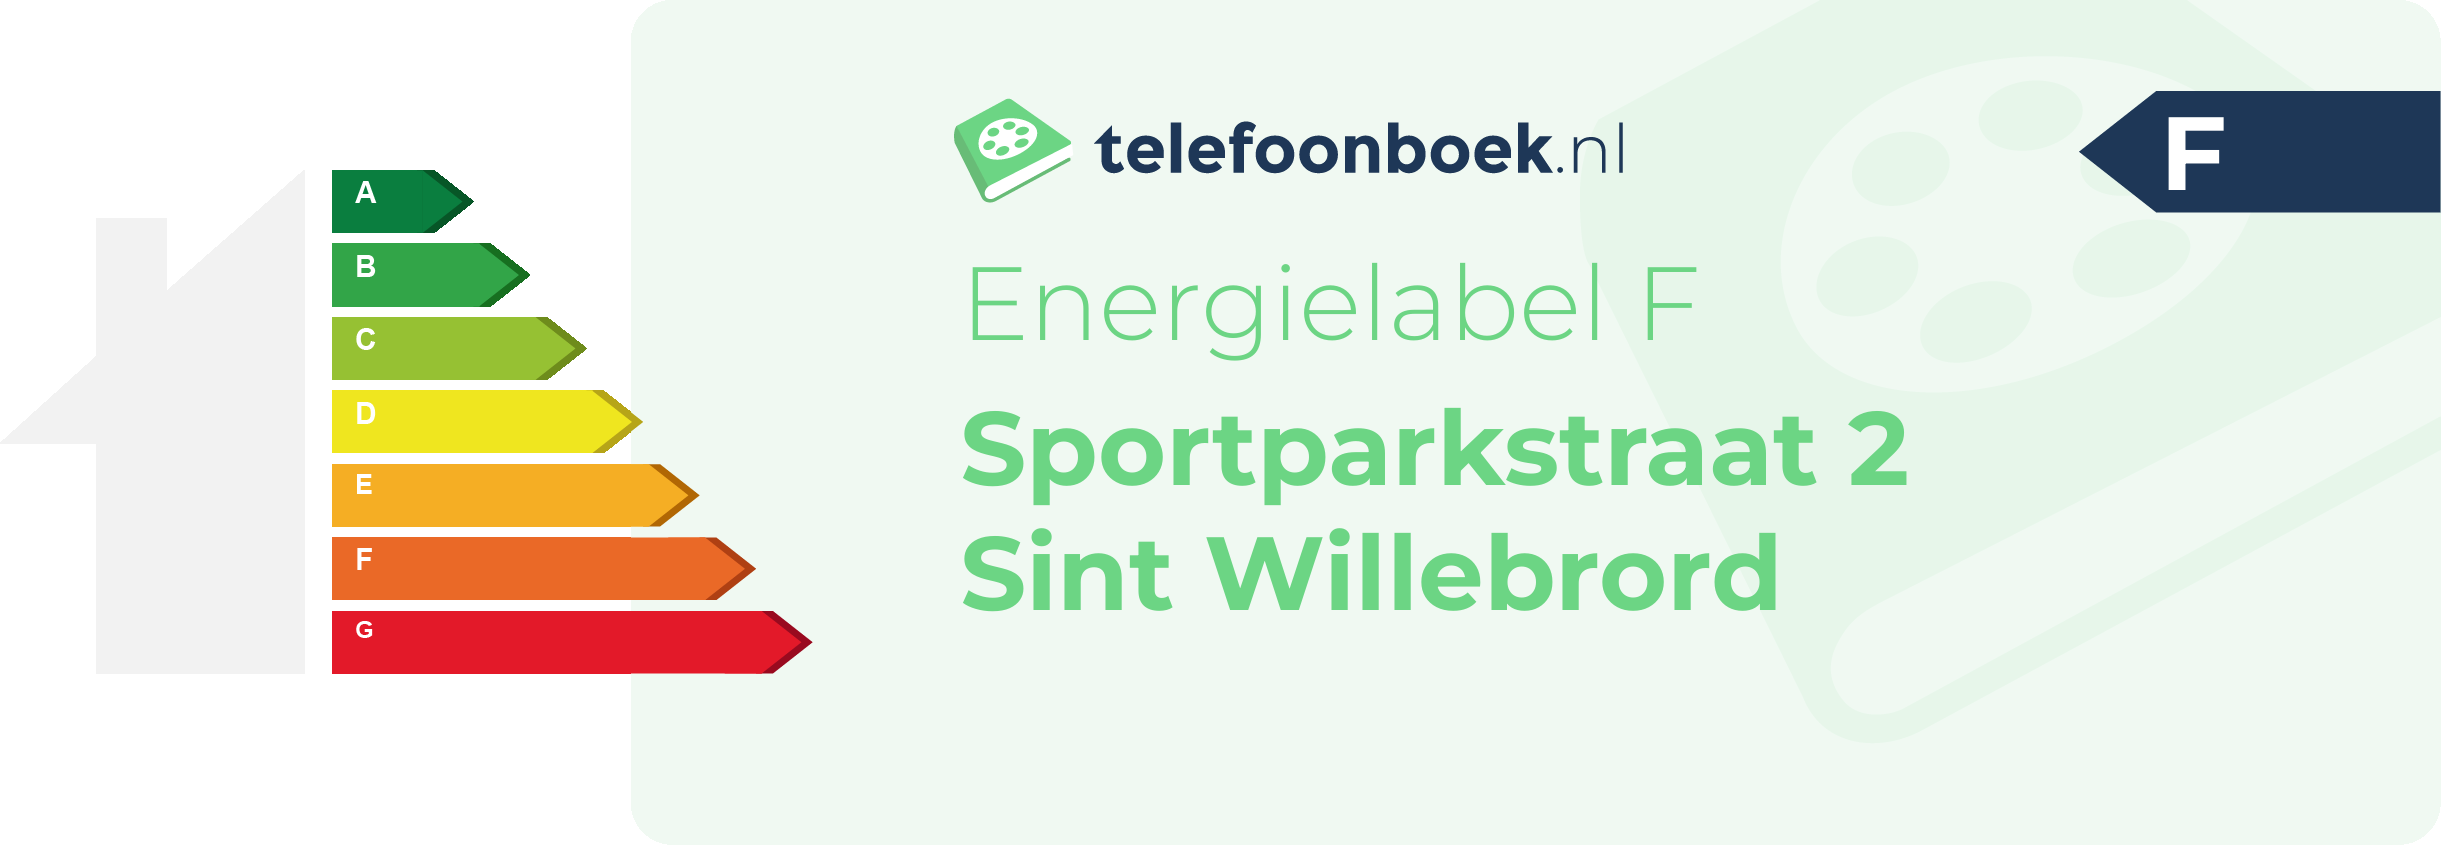 Energielabel Sportparkstraat 2 Sint Willebrord